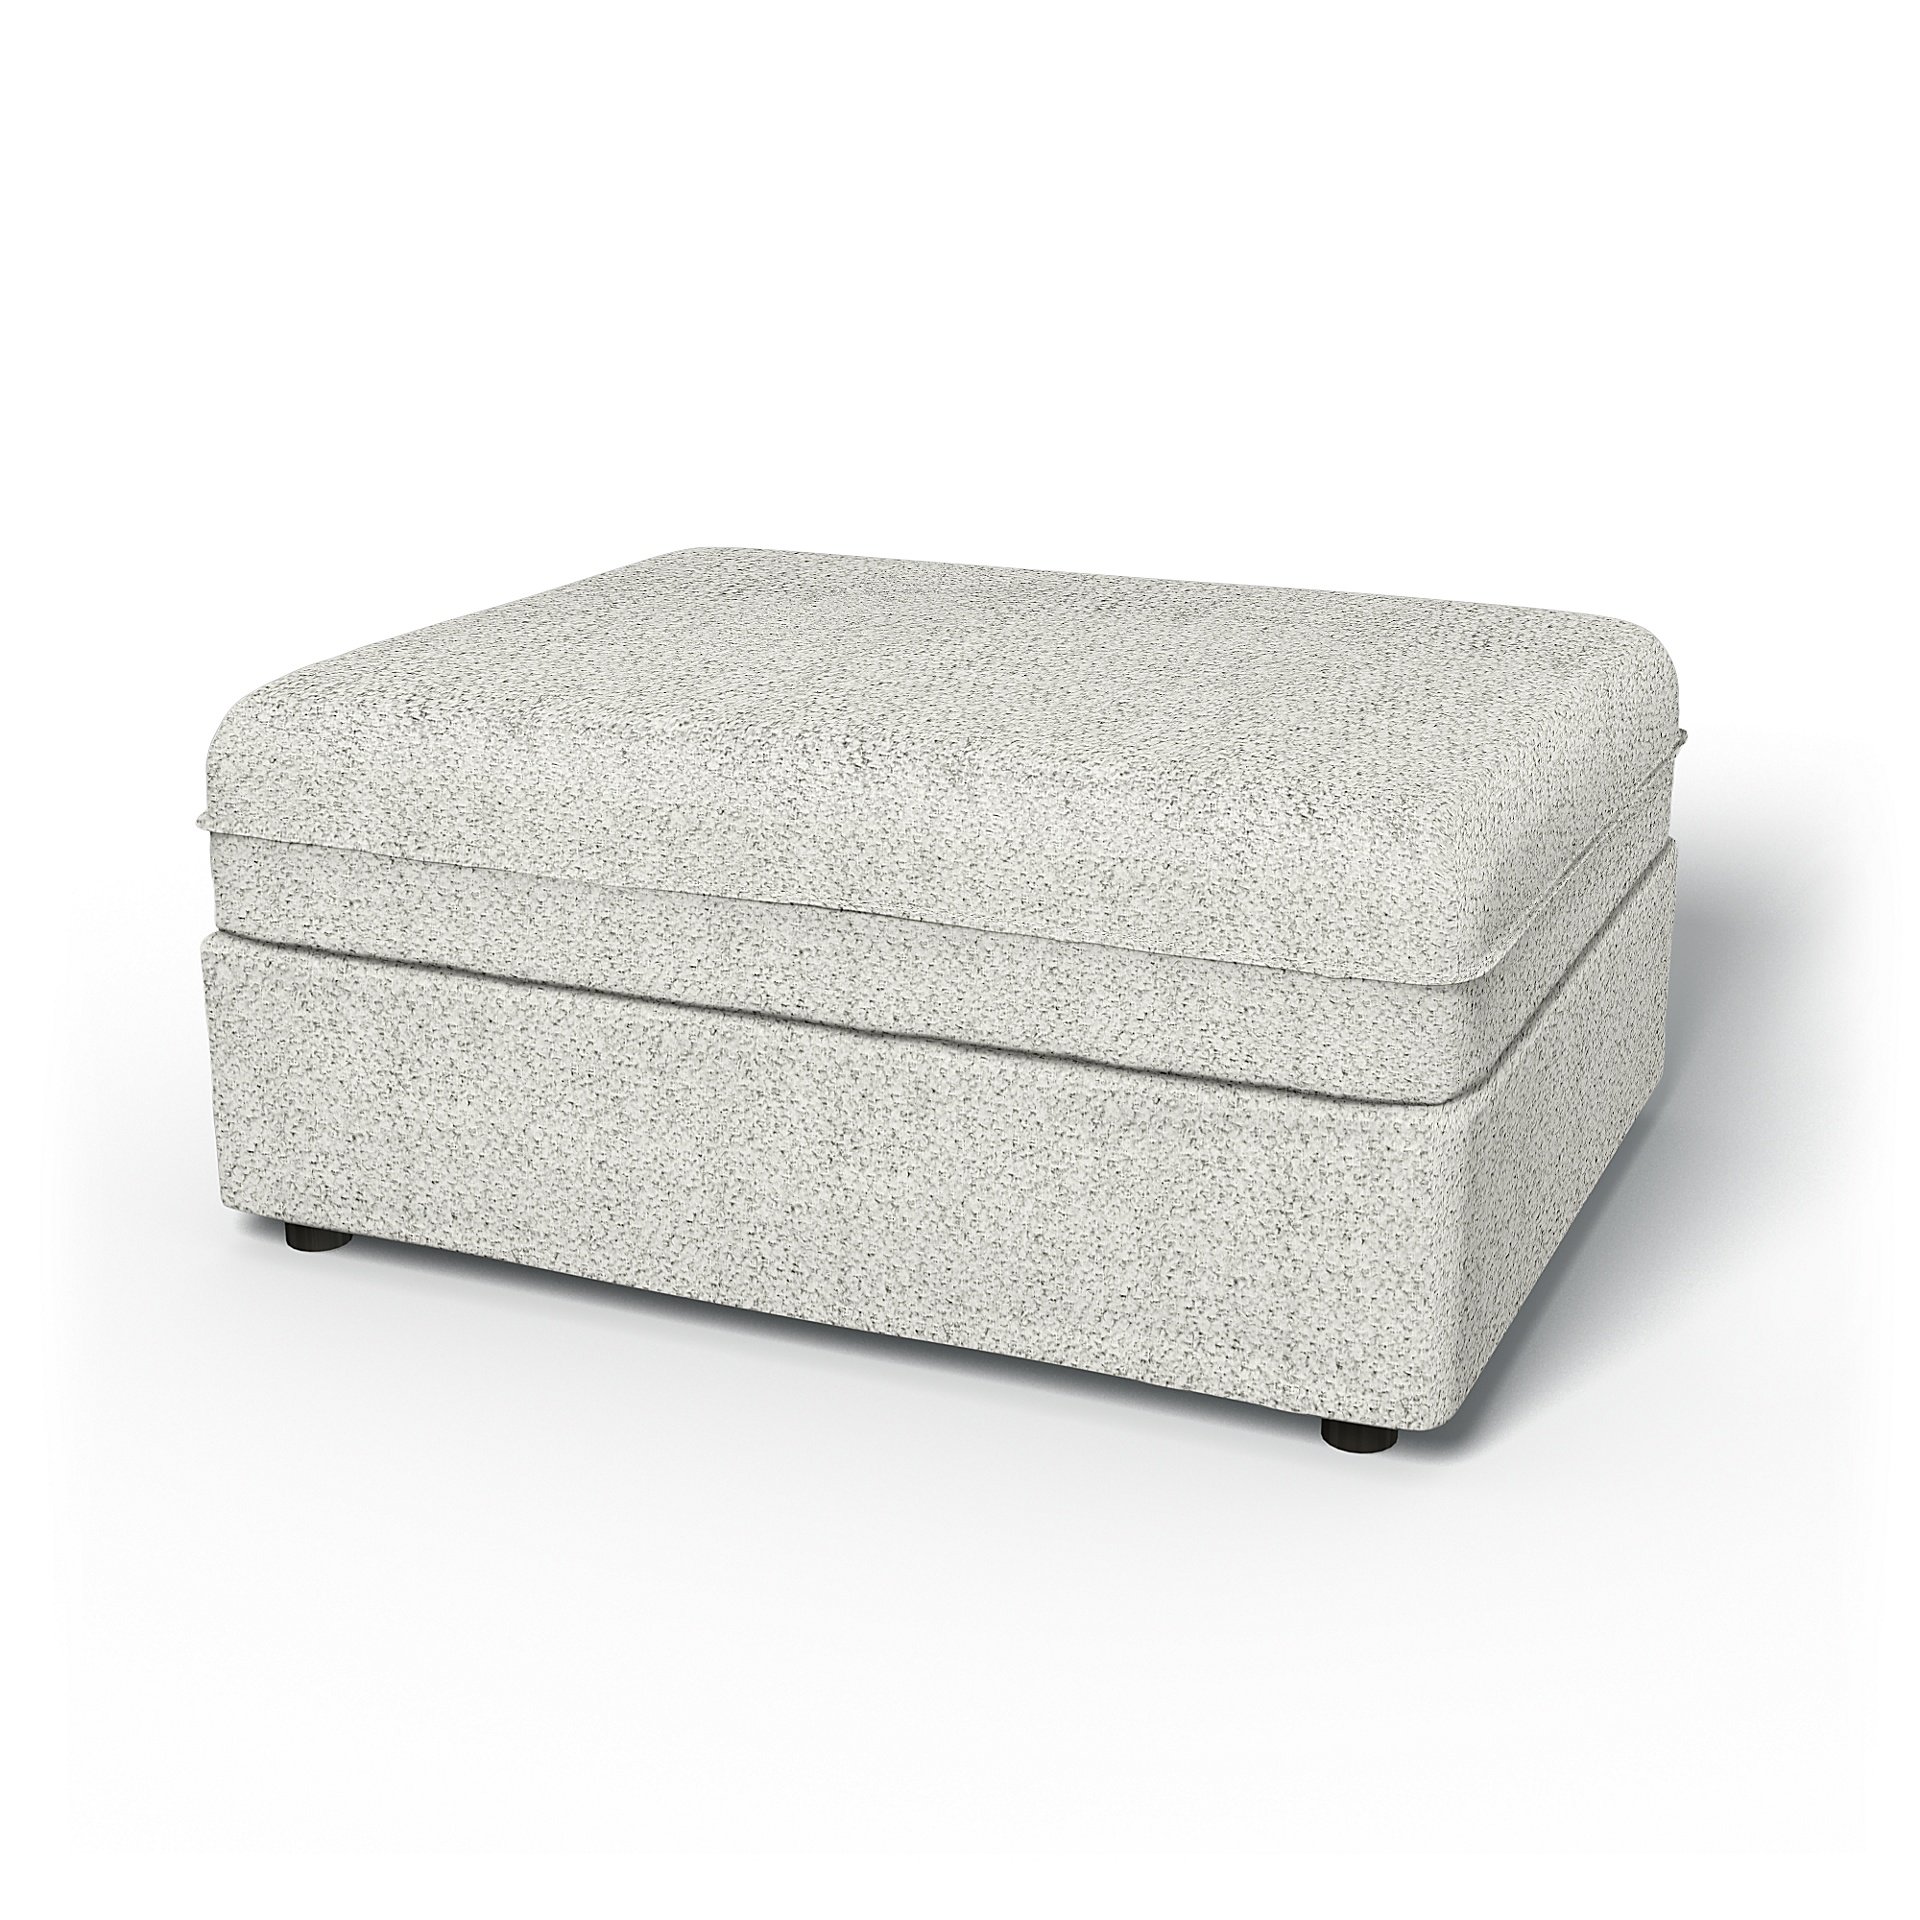 IKEA - Vallentuna Seat Module Cover 100x80cm 39x32in, Ivory, Boucle & Texture - Bemz